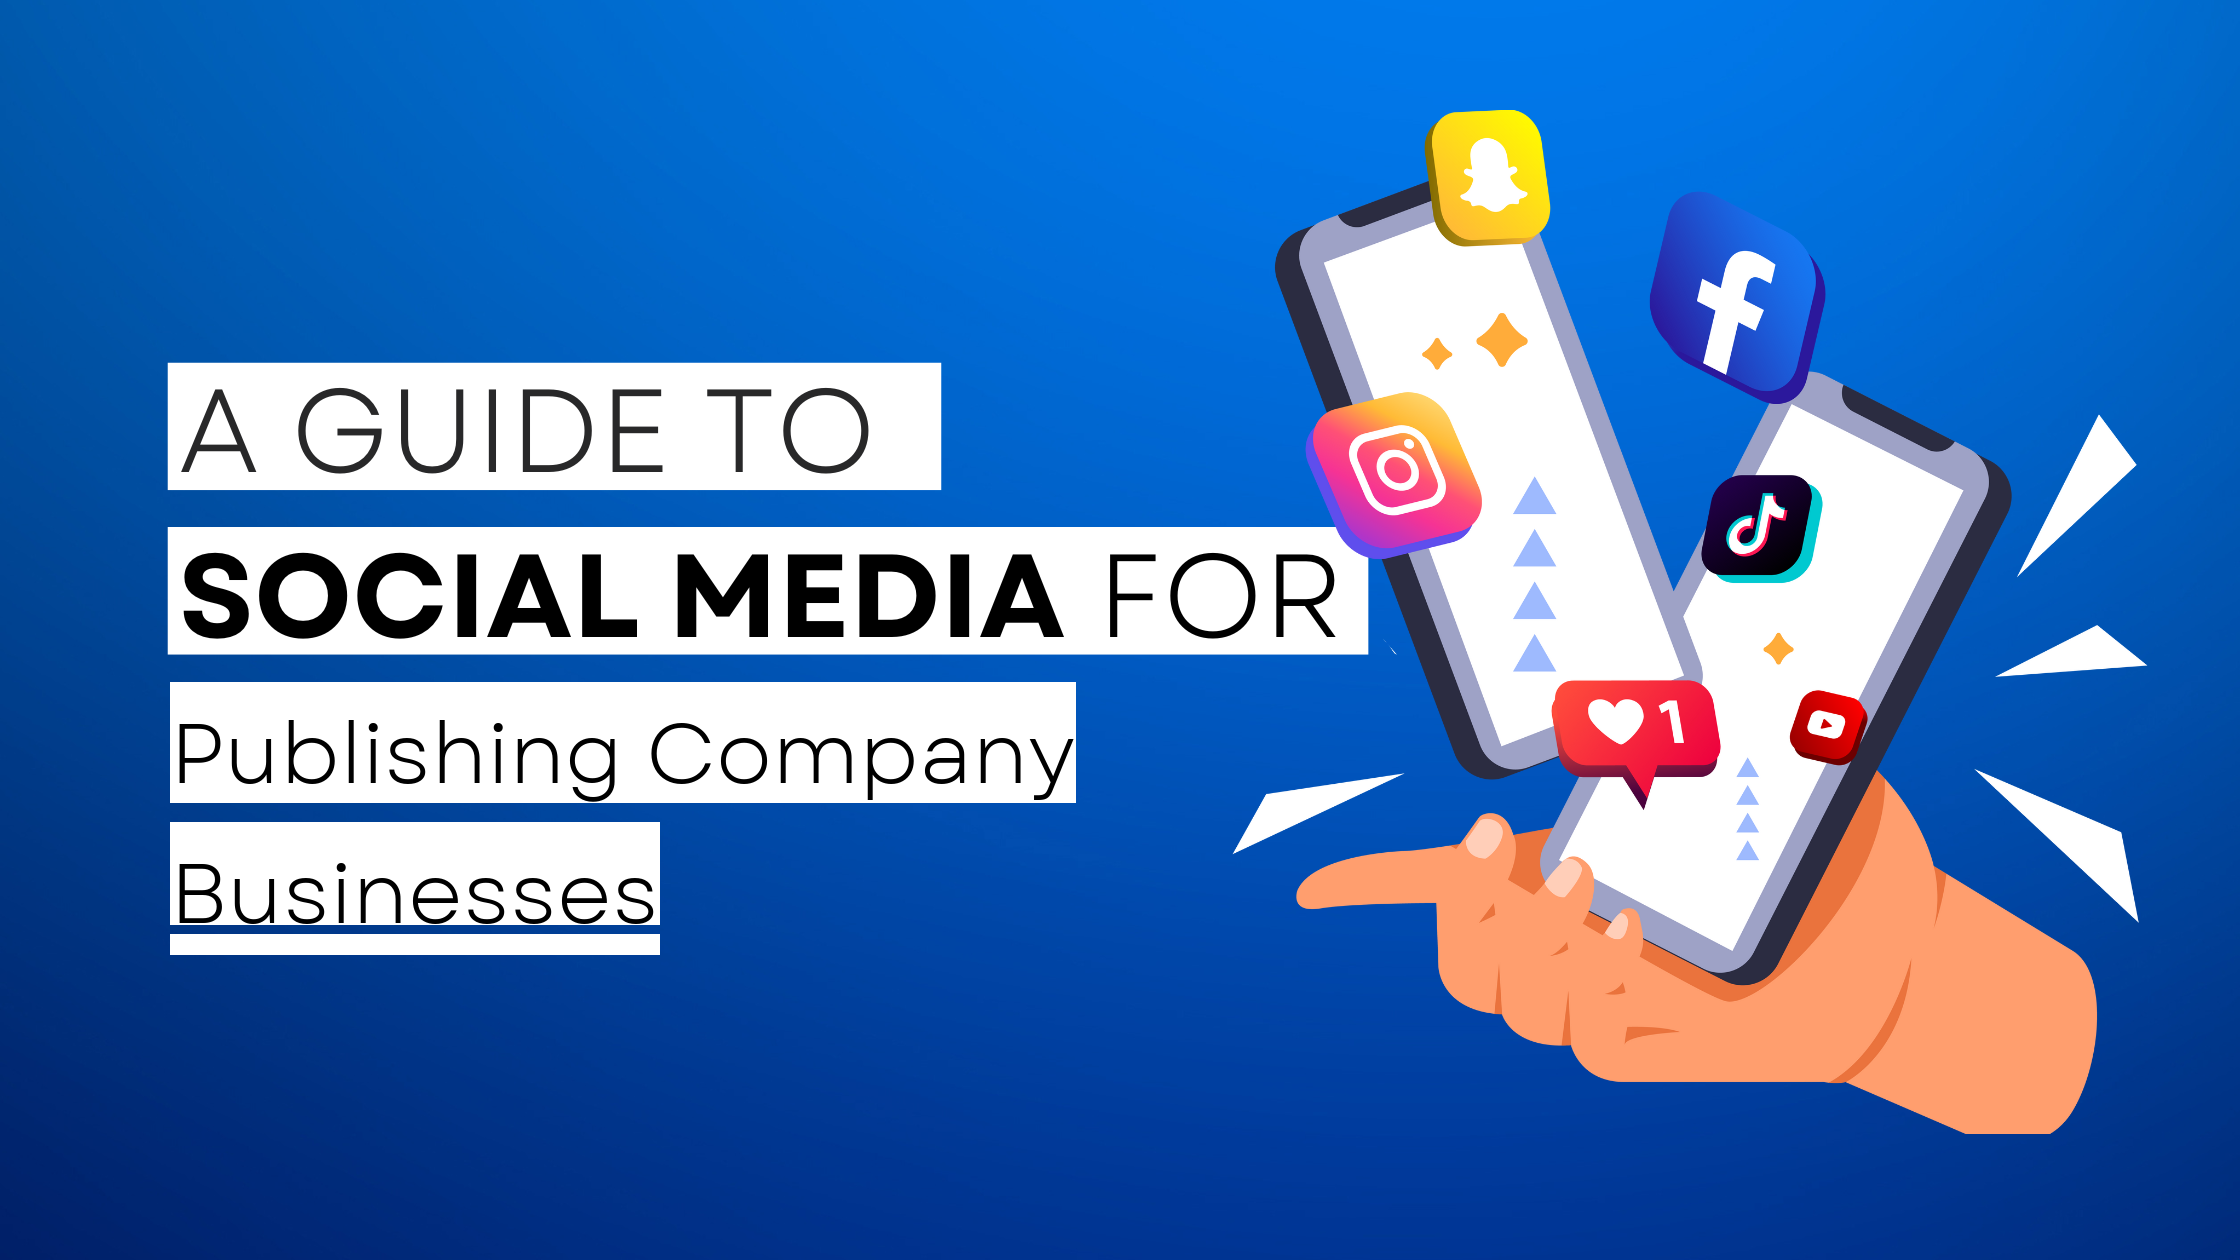 How to start Publishing Company on social media